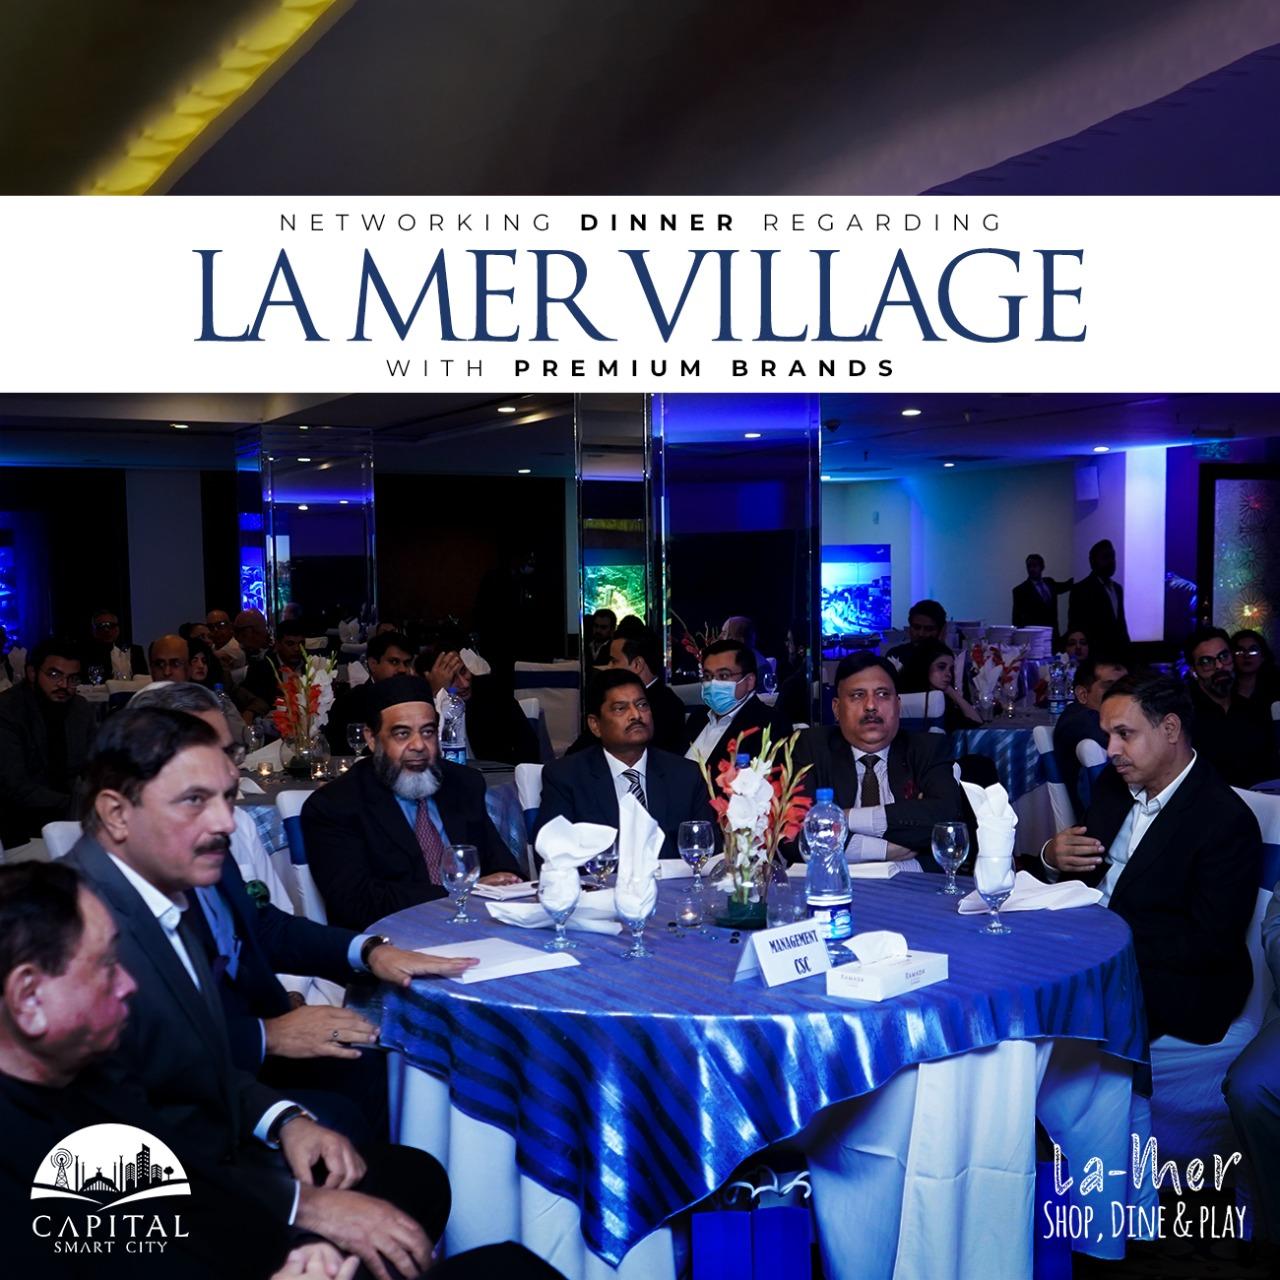 Networking dinner regarding La Mer village with premium brands